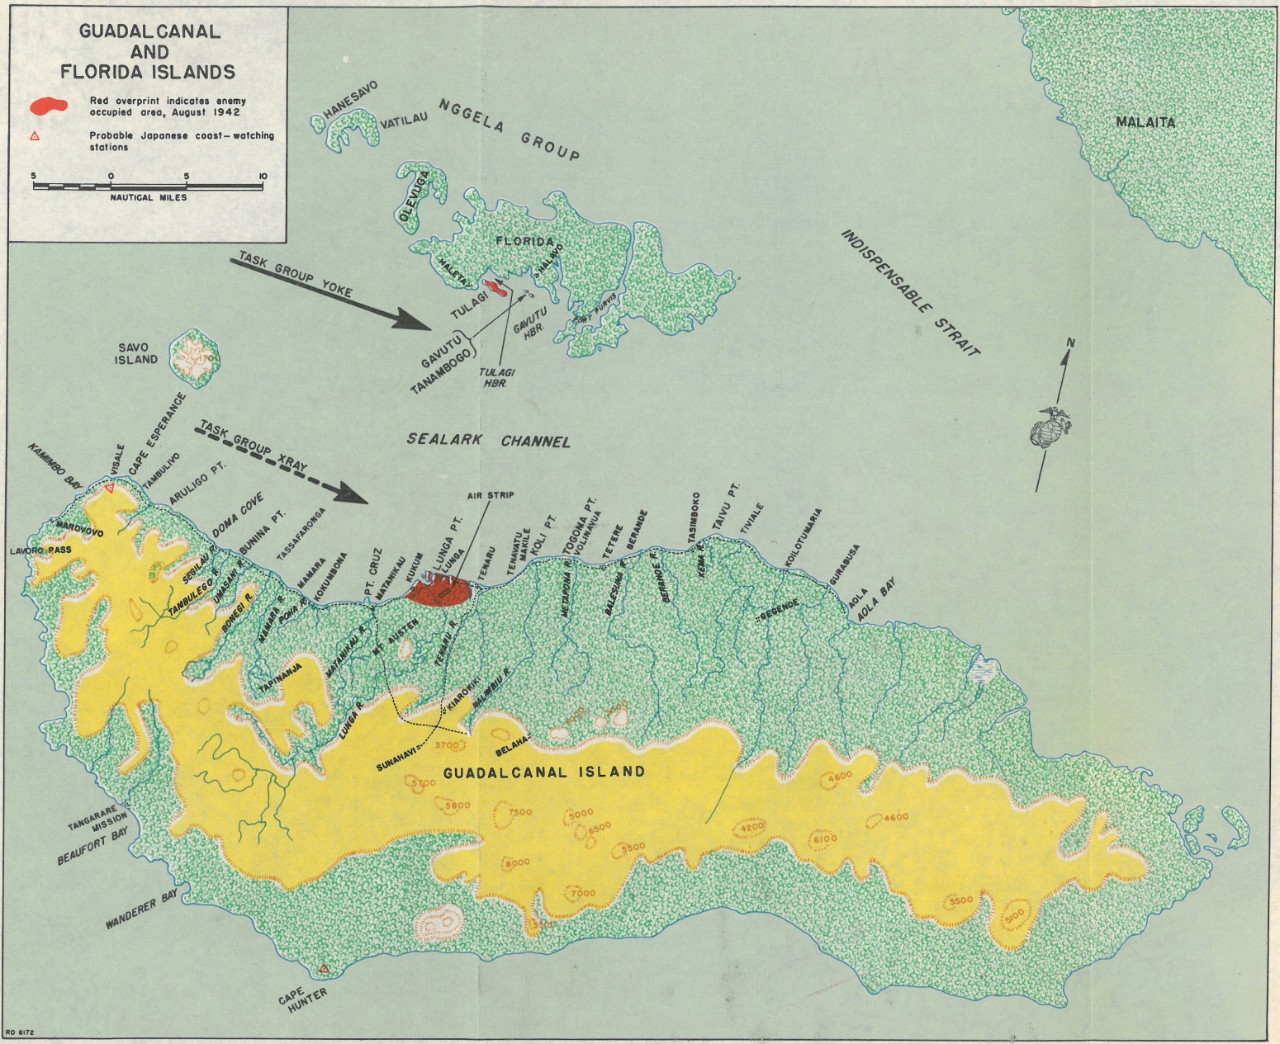 Map 1: Guadalcanal and Florida Islands